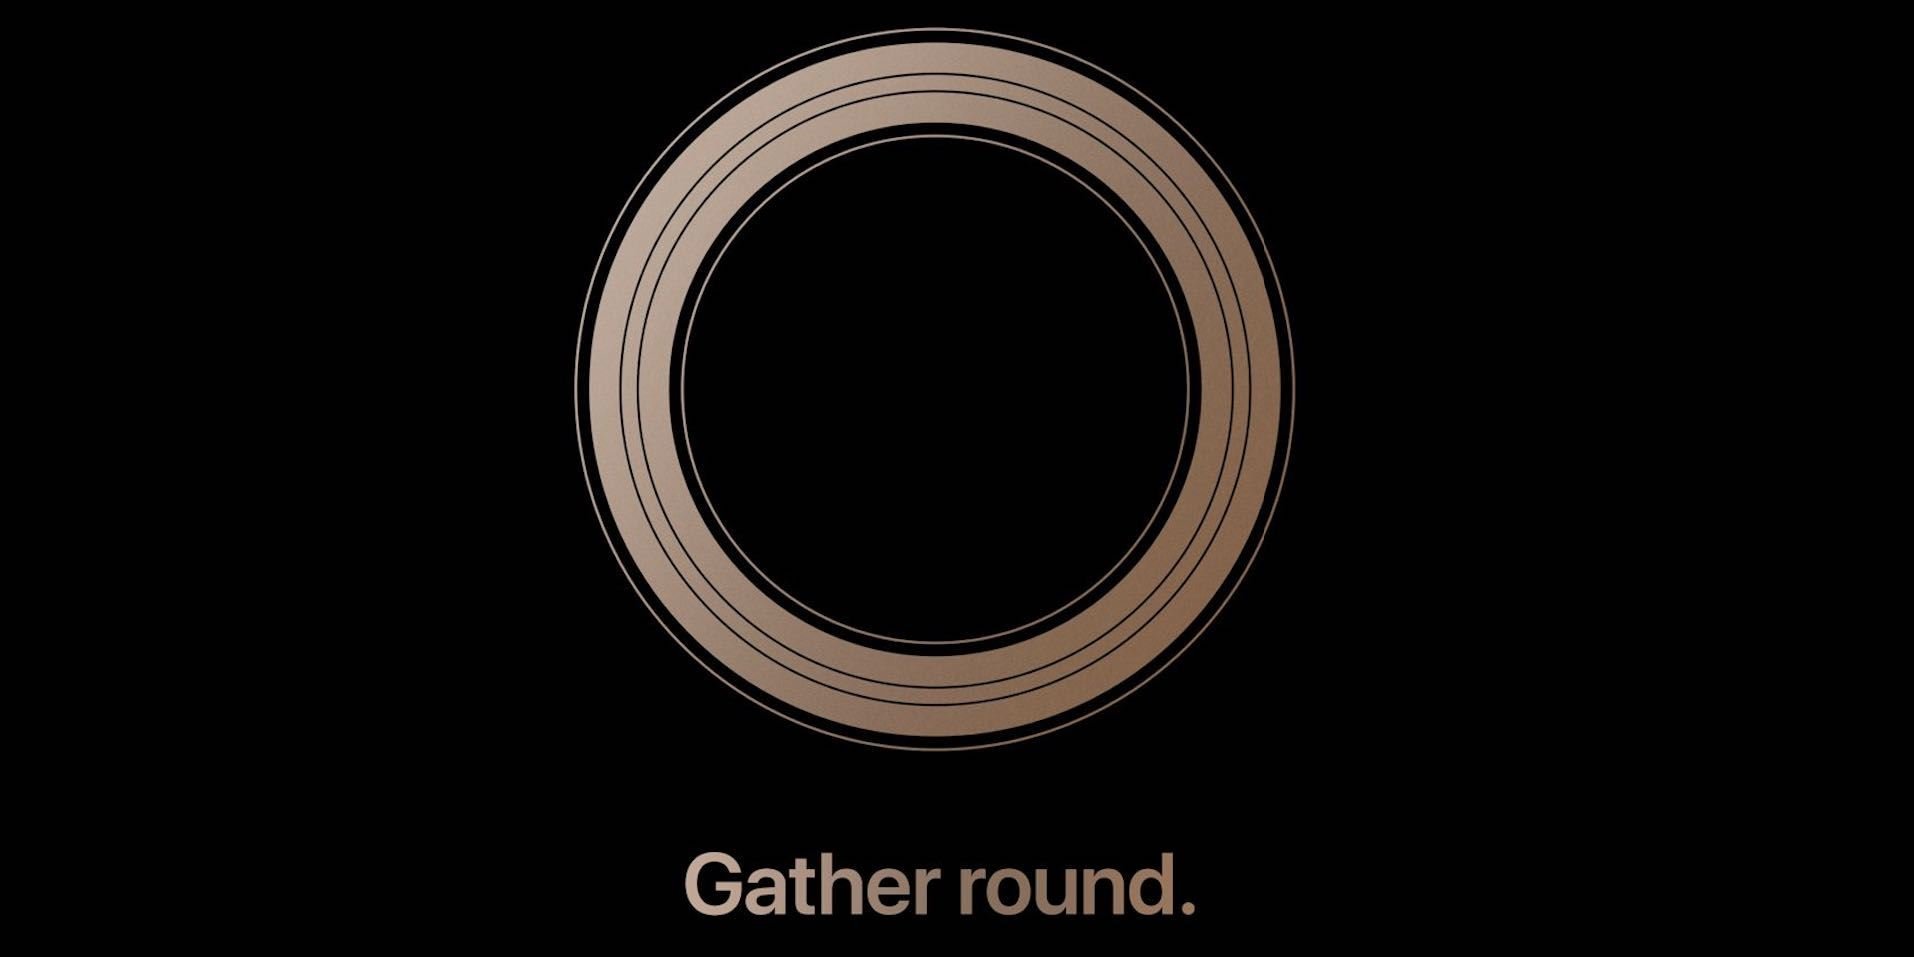 Apple-iPhone-event